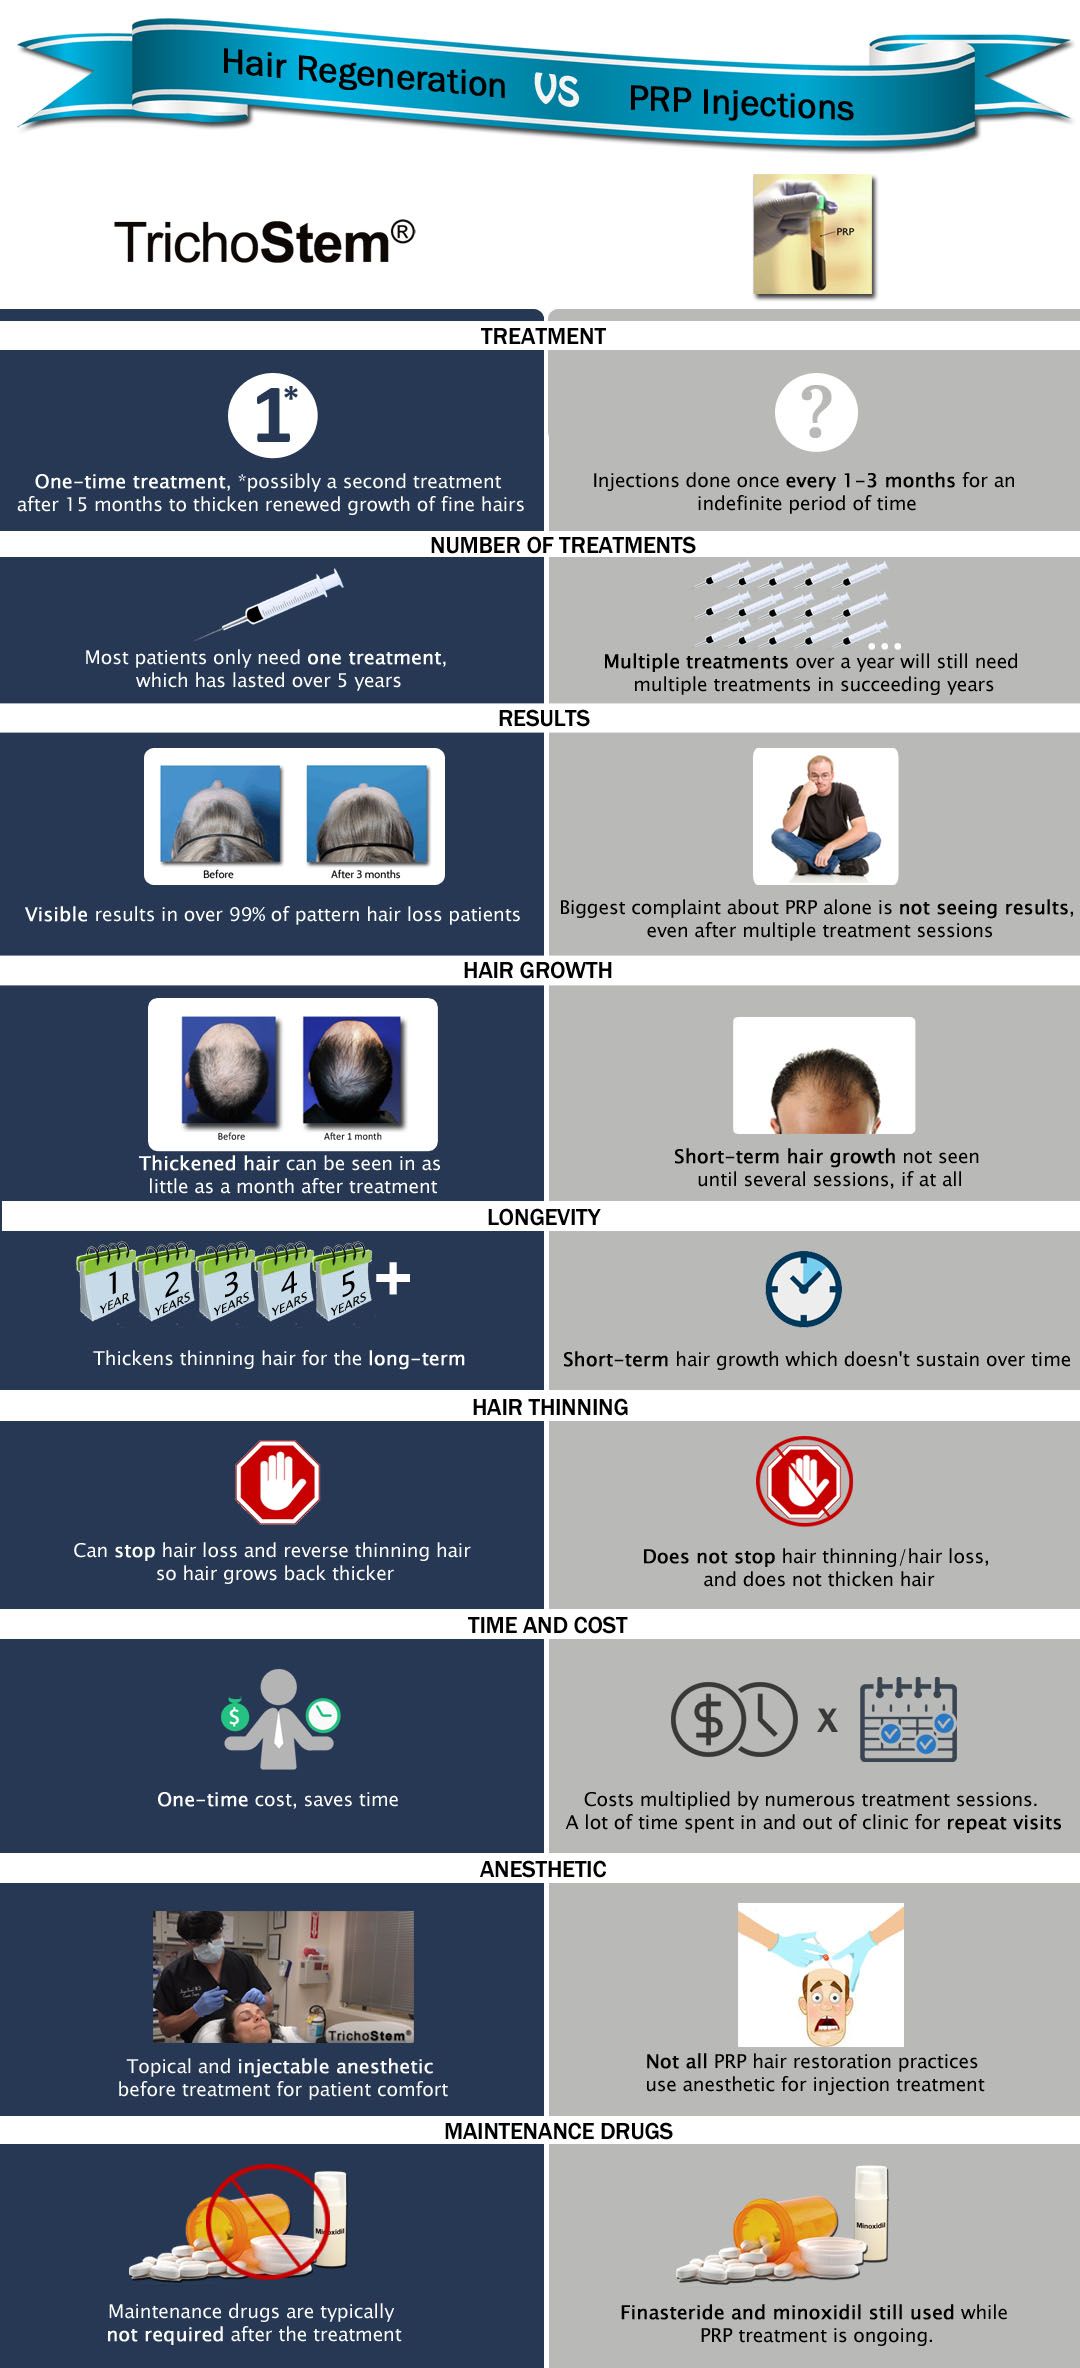 trichostem hair regeneration vs prp injection infographic